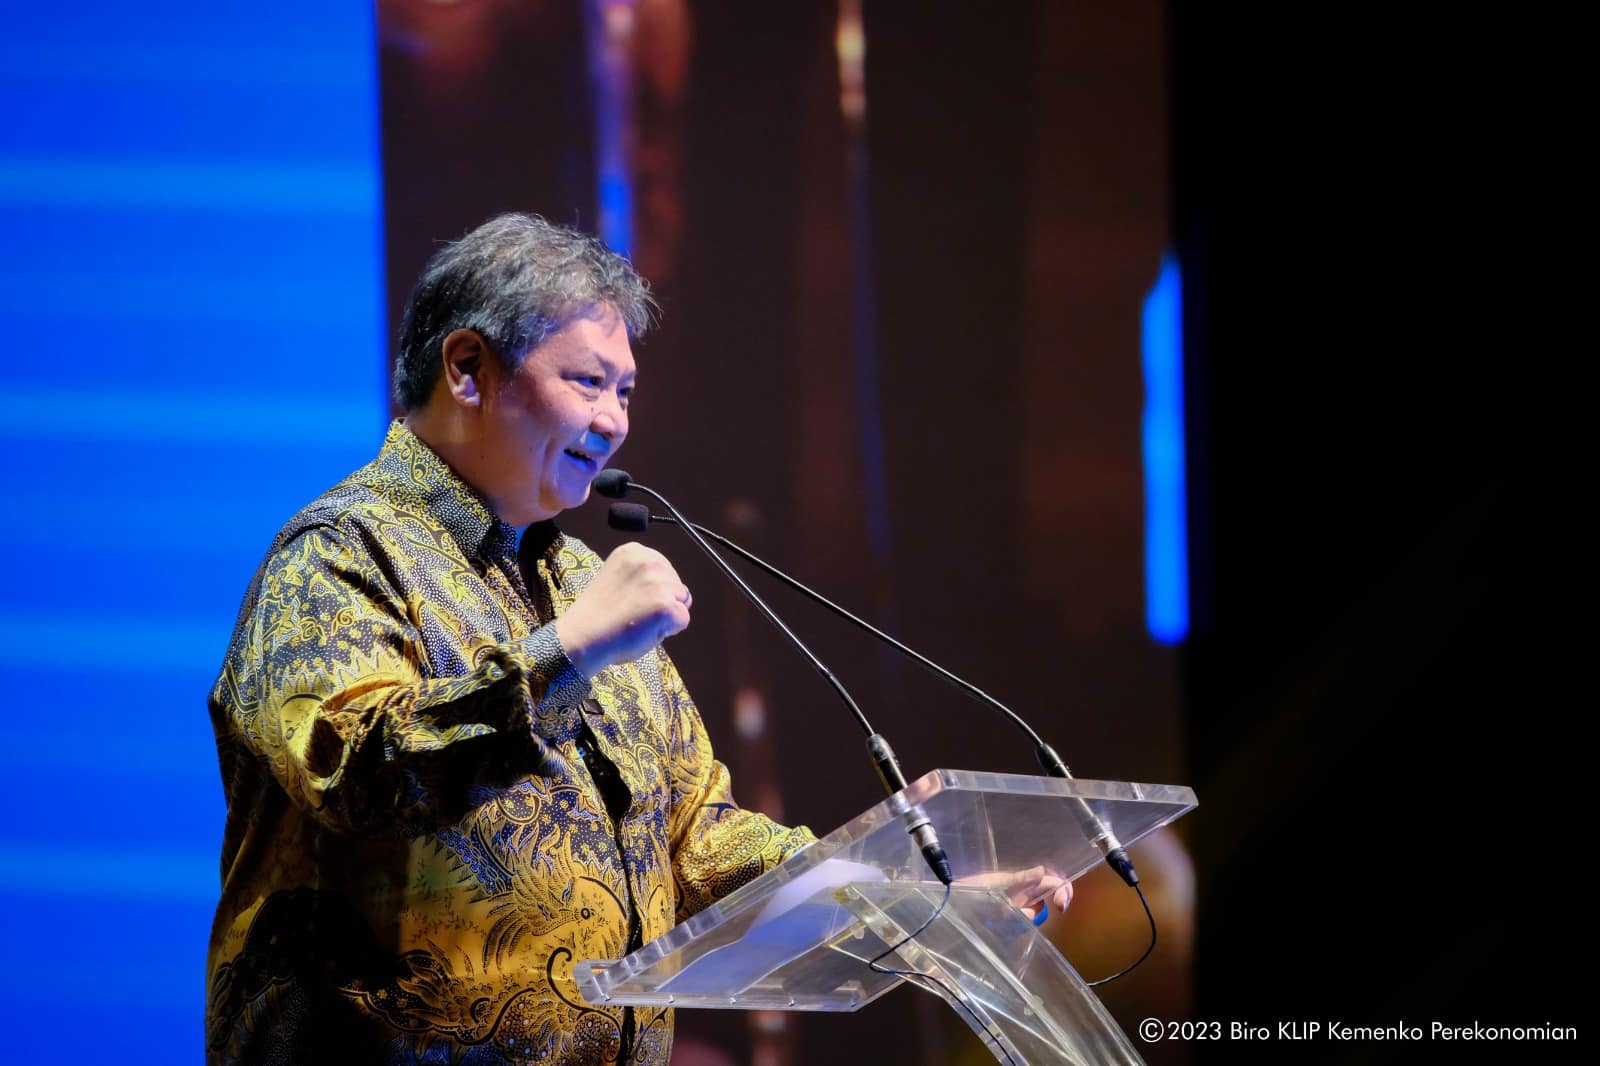 Menteri Koordinator Bidang Perekonomian Airlangga Hartarto berbicara di podium berbaju batik kuning